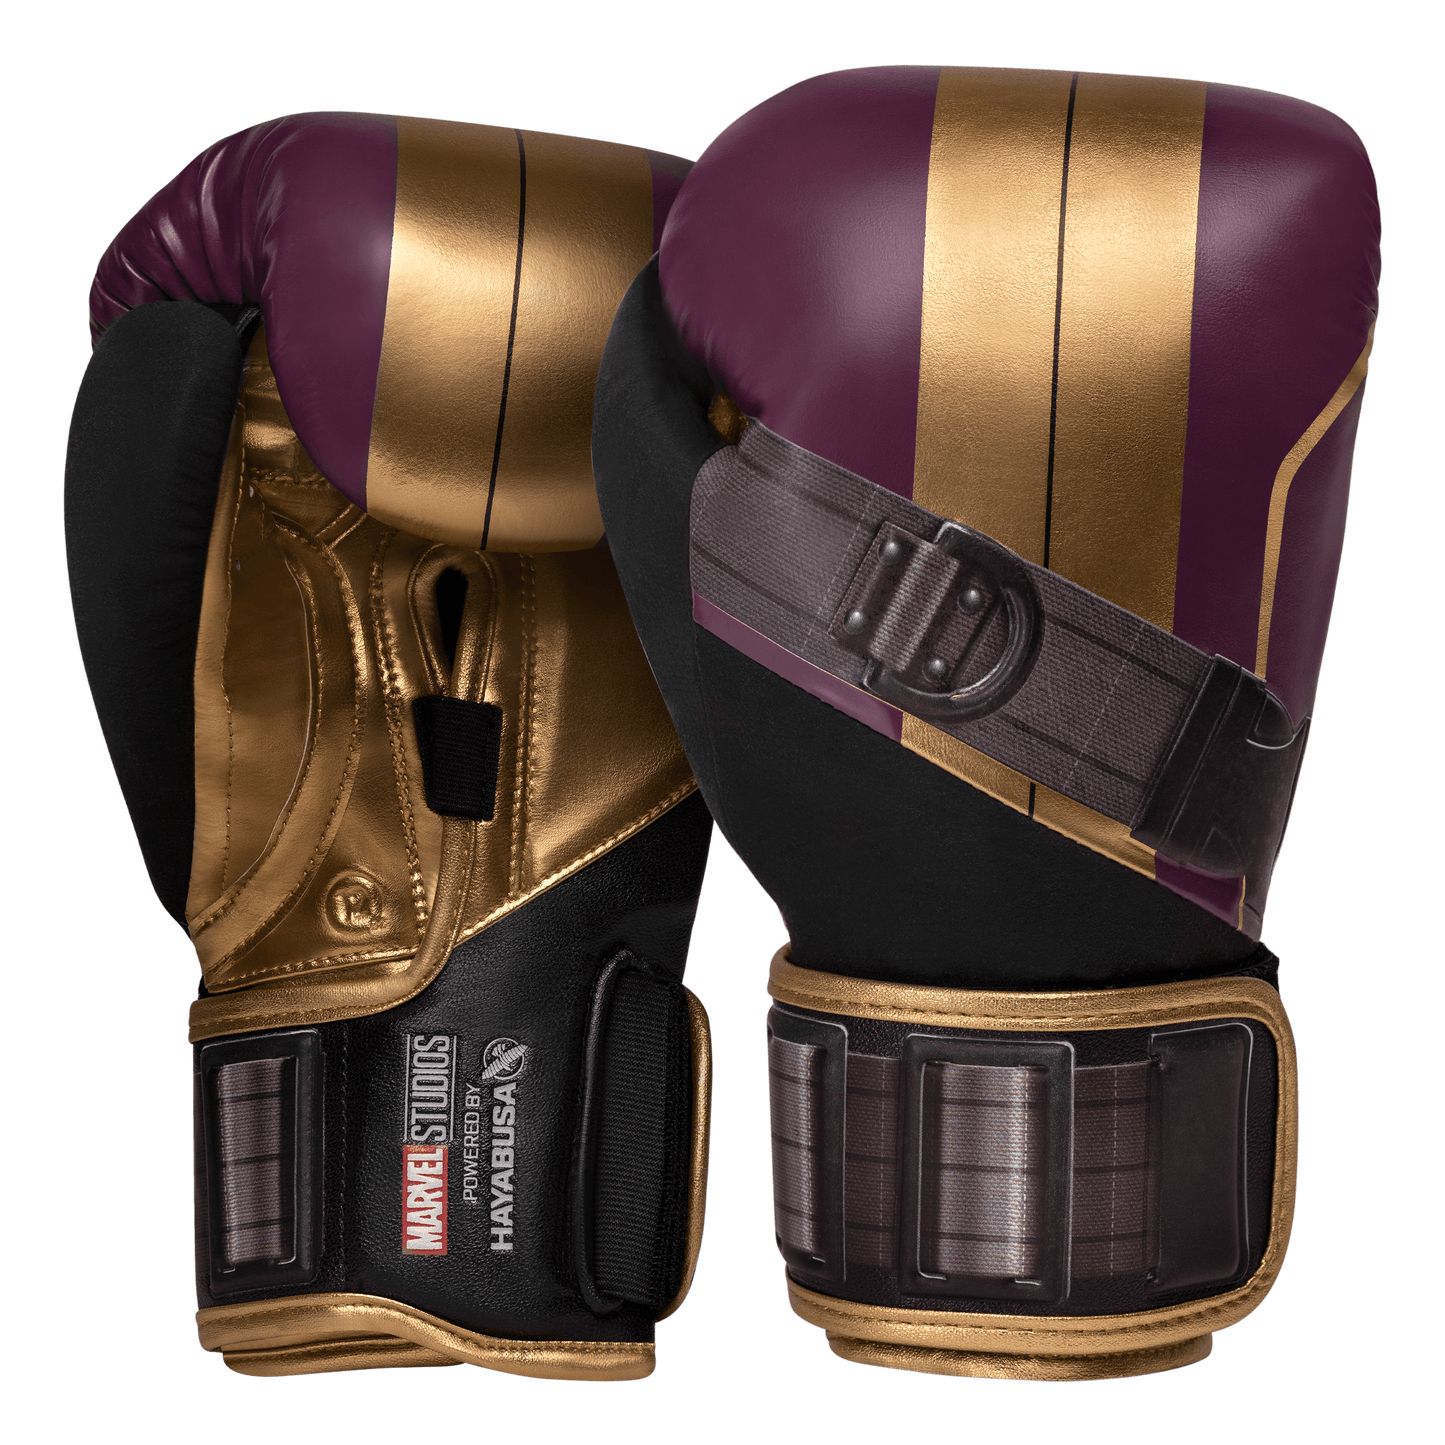 Marvels Batroc Boxing Gloves - Violent Art Shop